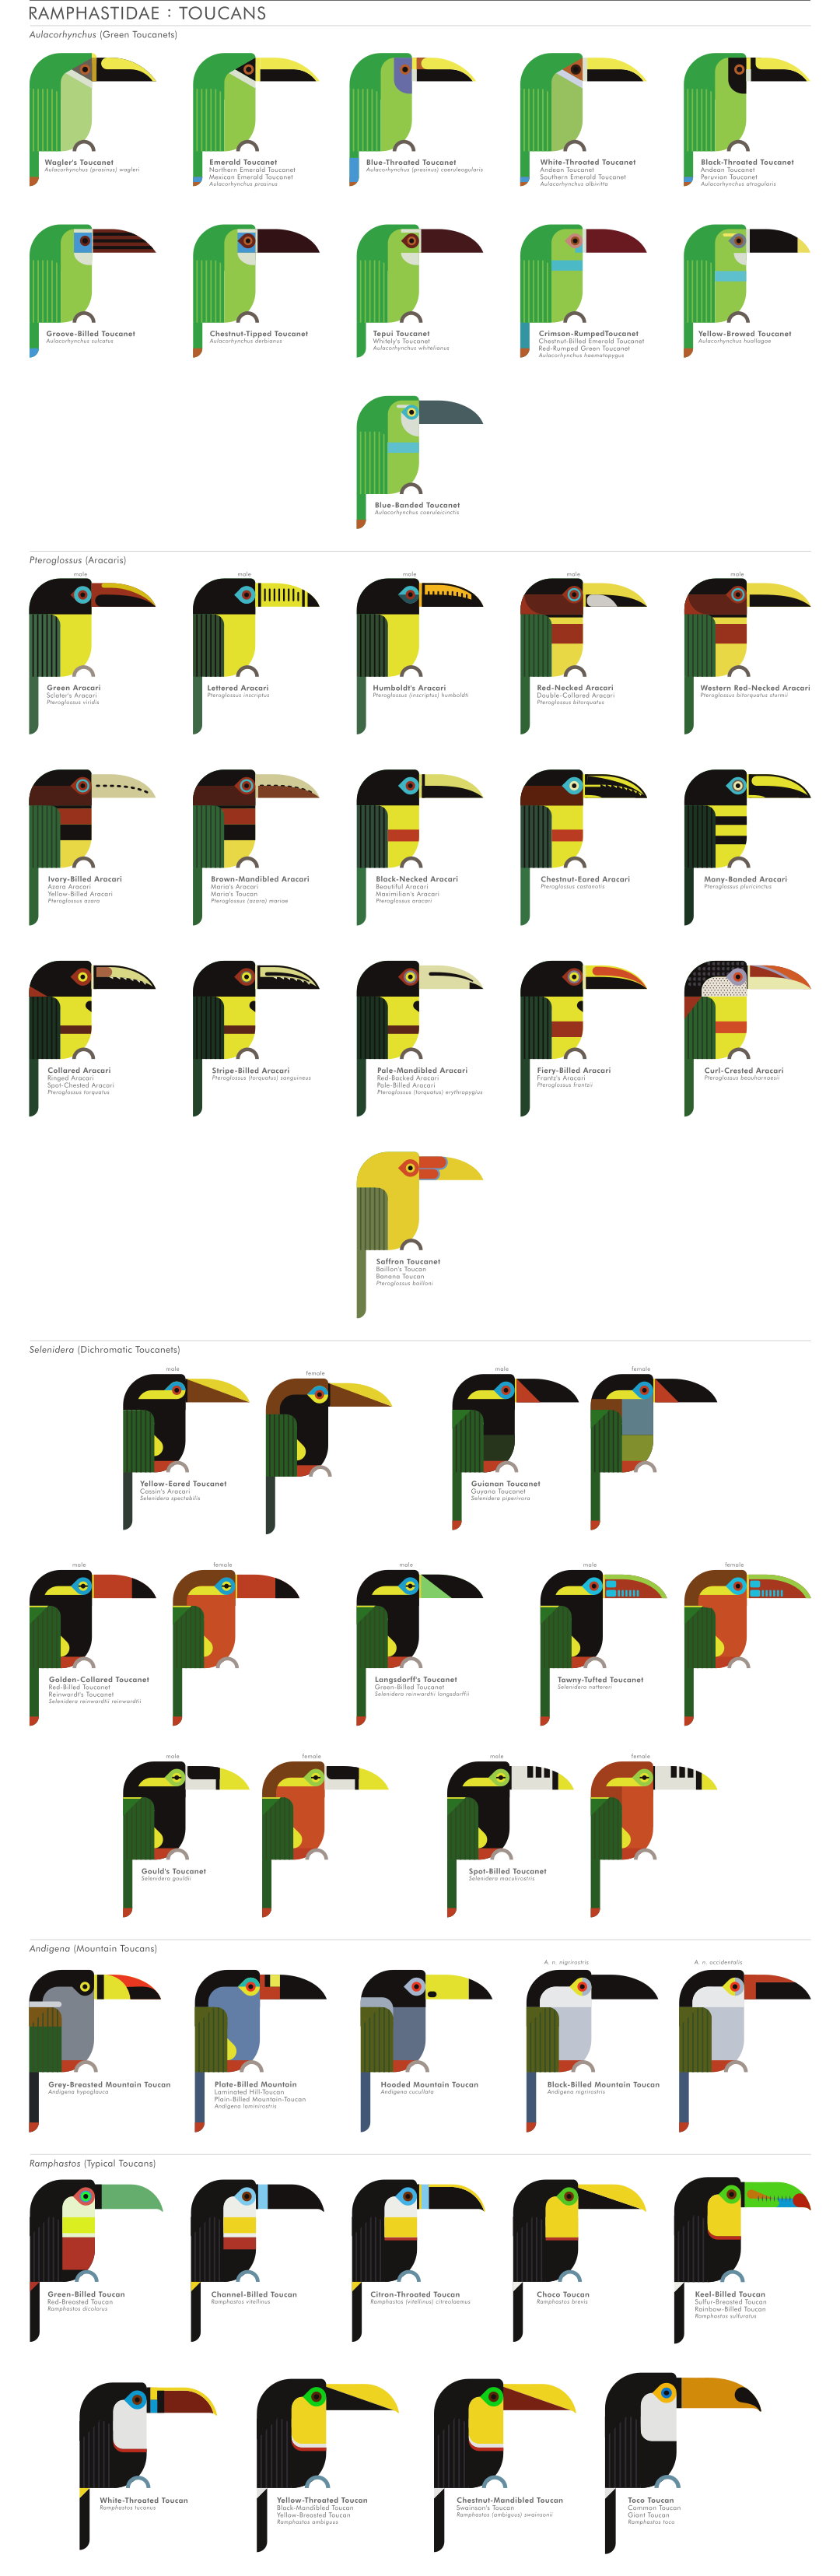 scott partridge - ave - avian vector encyclopedia - new world barbets Lybiidae piciformes - vector bird art